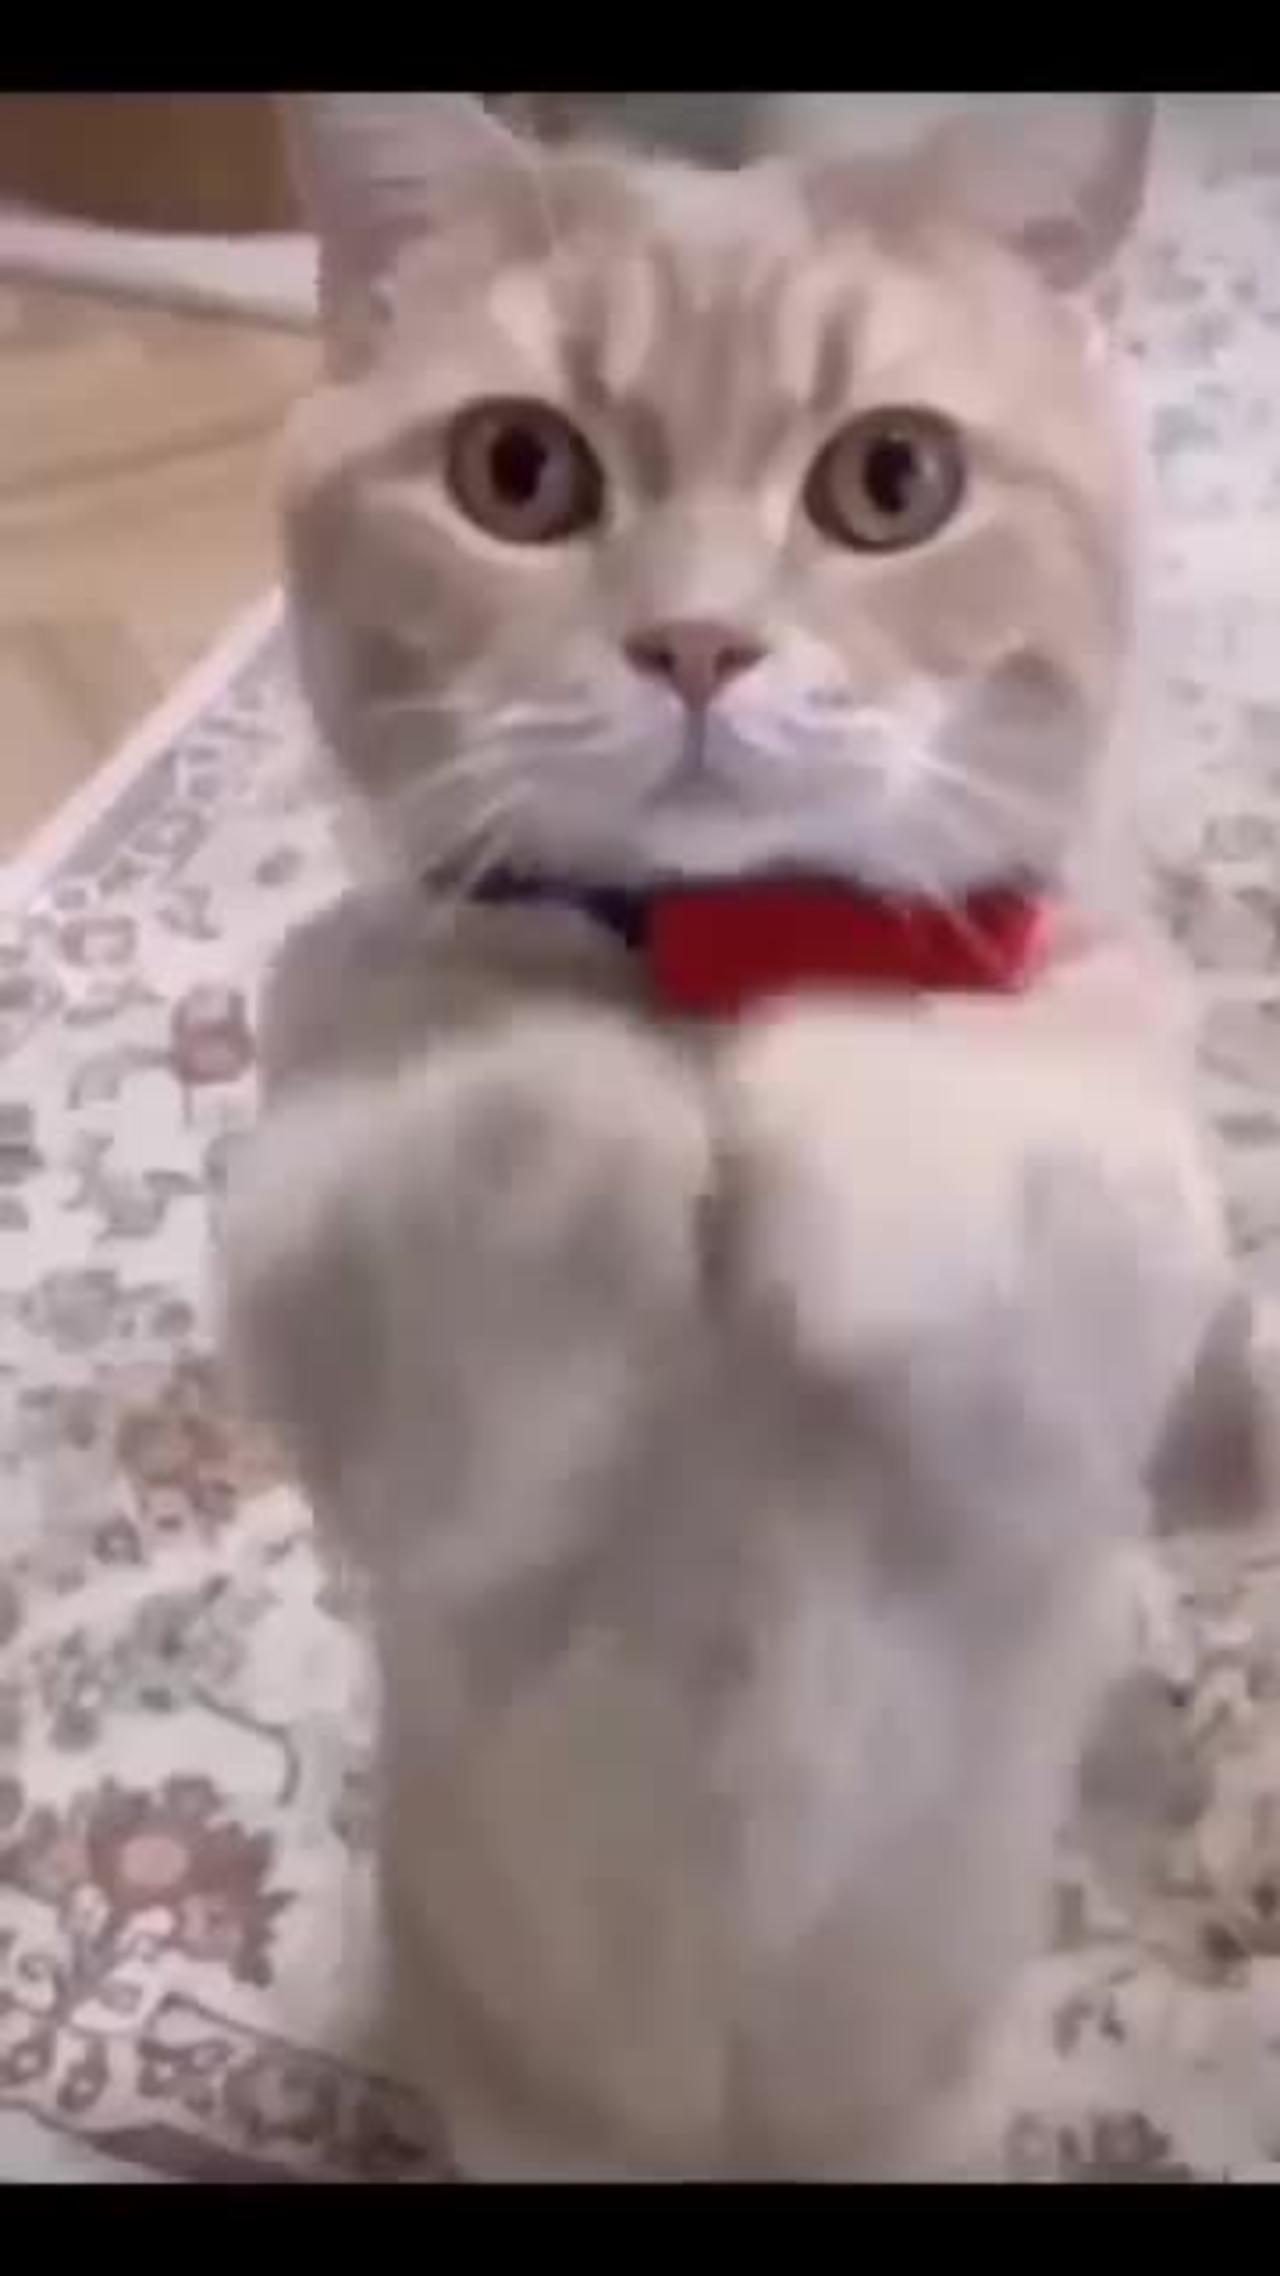 Funniest cat video